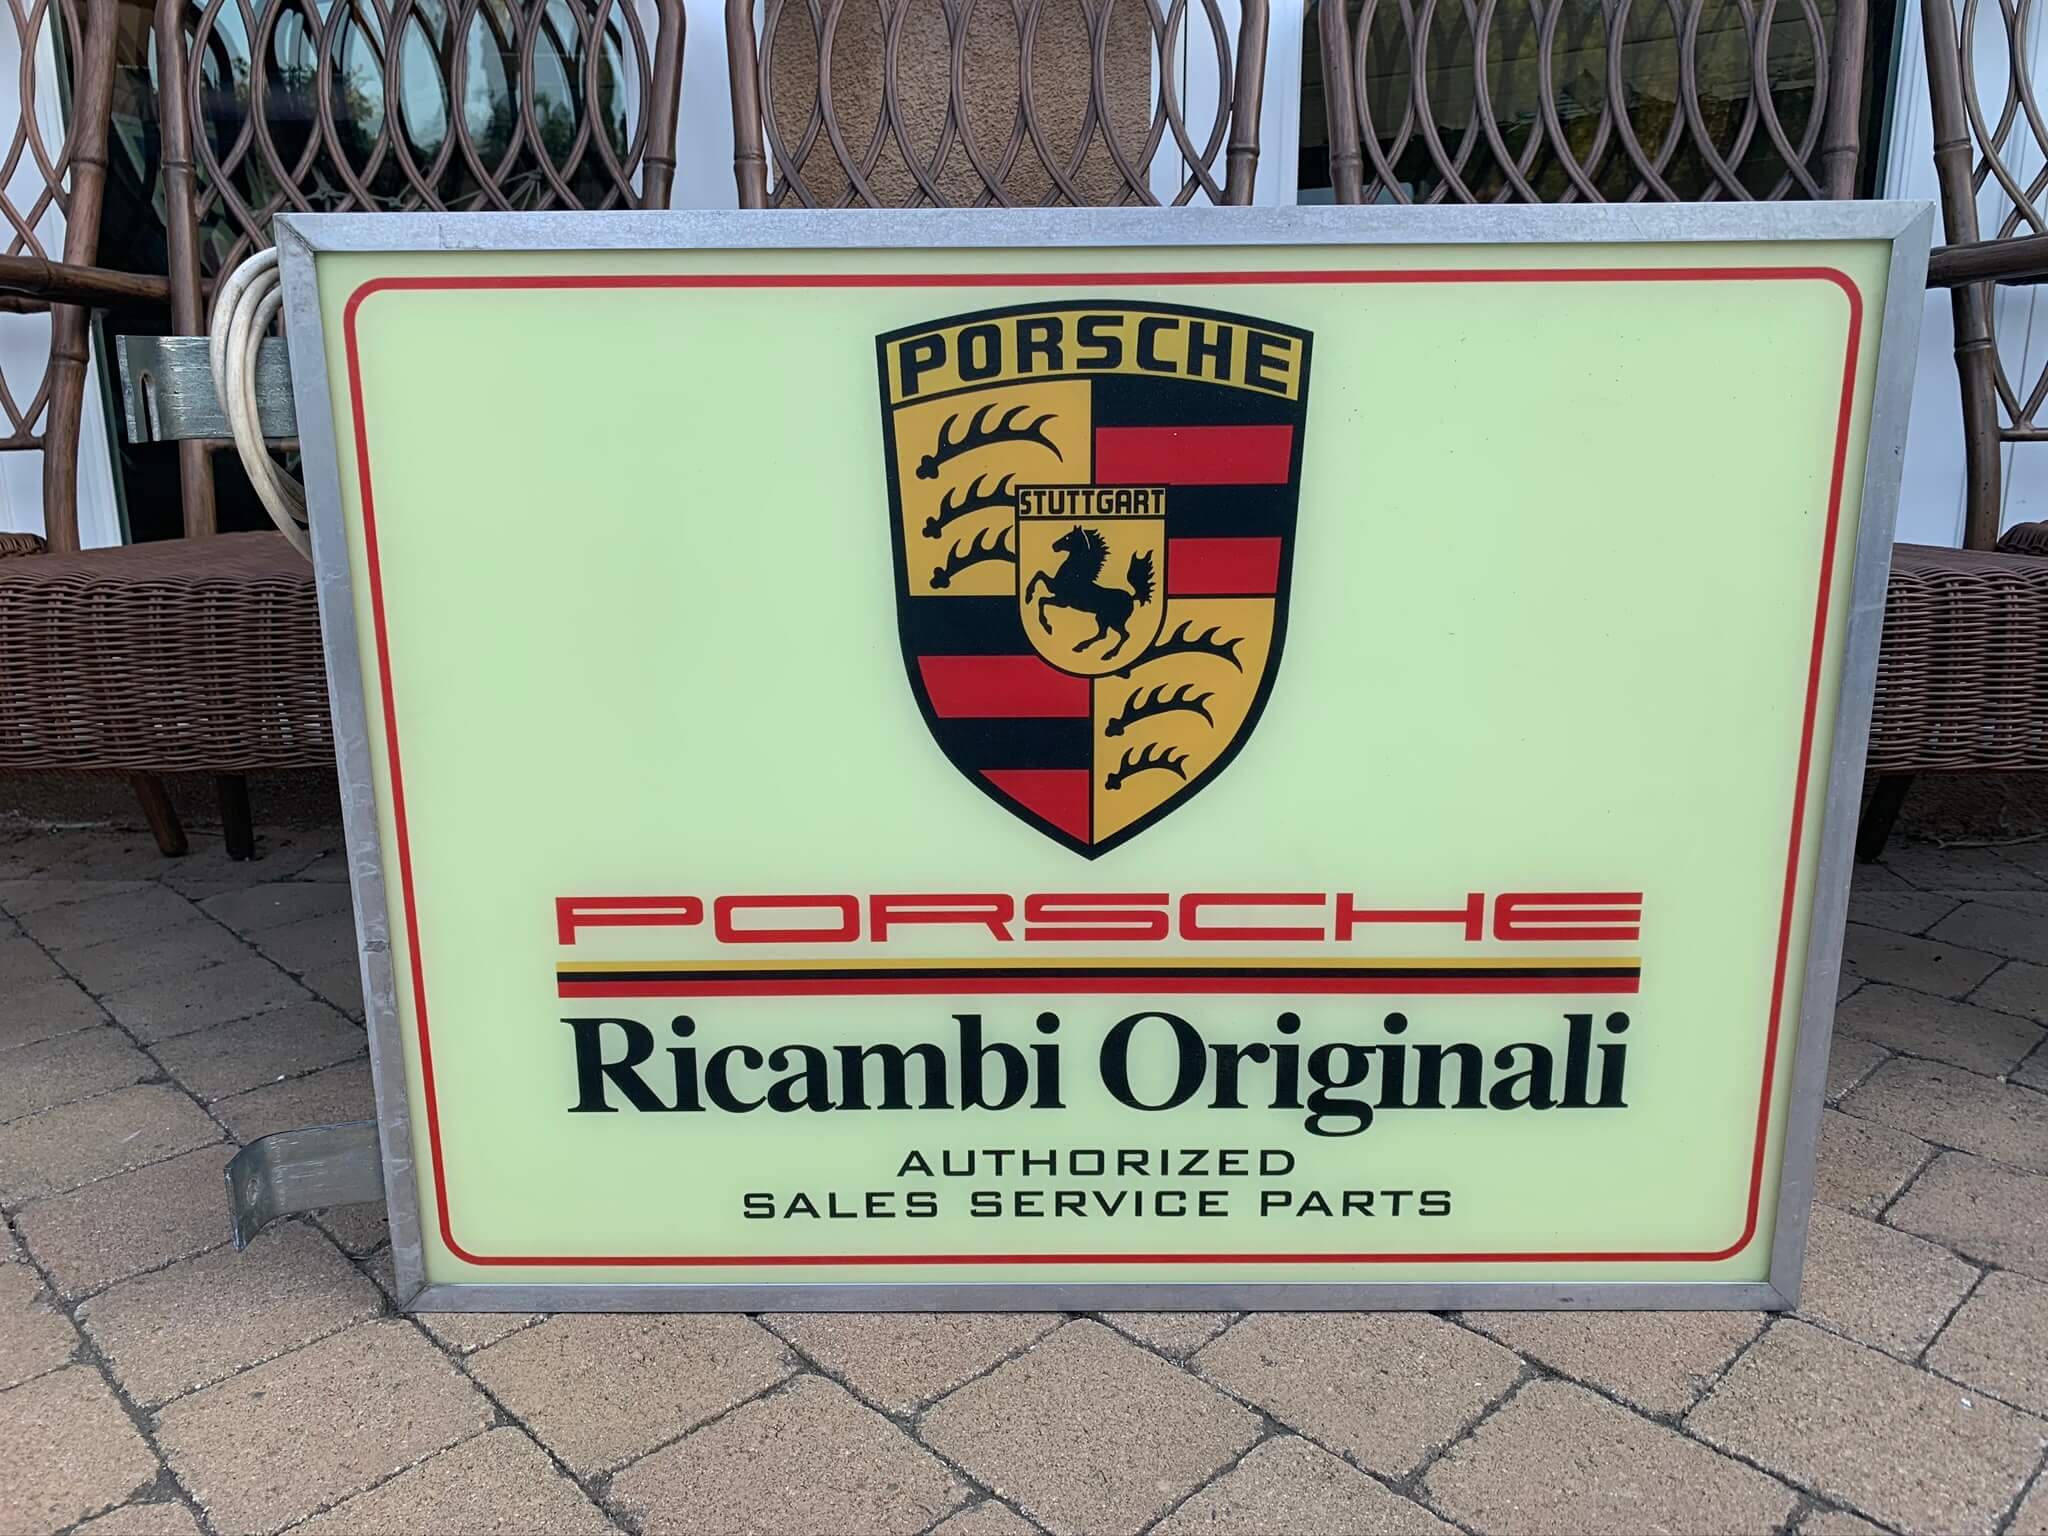  Porsche Ricambi Originali Double-Sided Illuminated Sign (31" x 24")